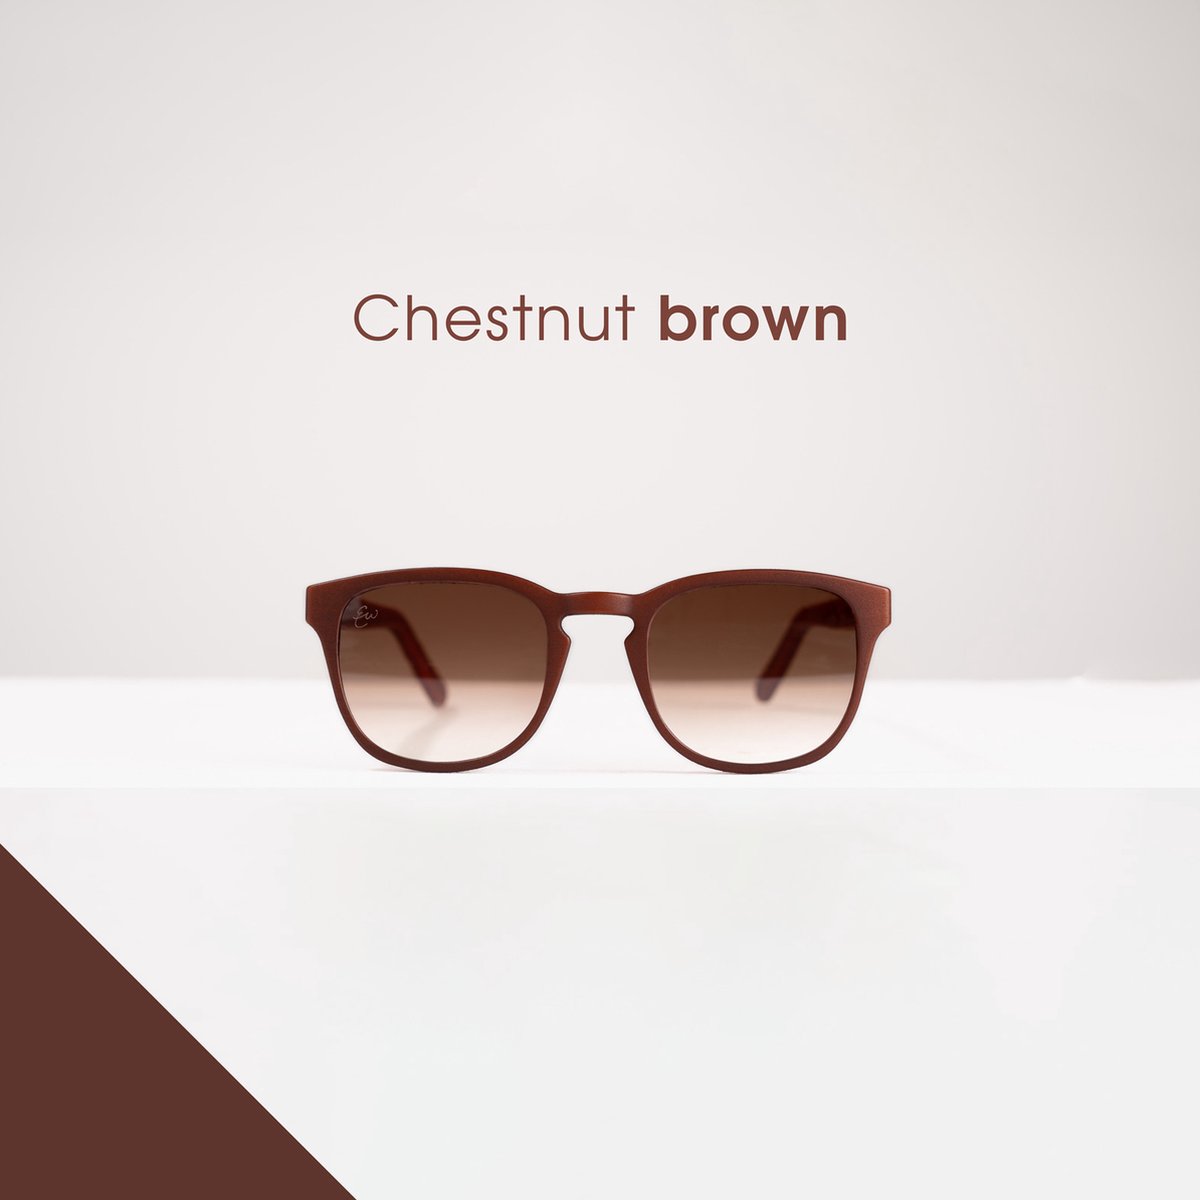 EveryWear Cape-Town - Chestnut brown - Duurzame Zonnebril - Hoge kwaliteit - Plantaardig